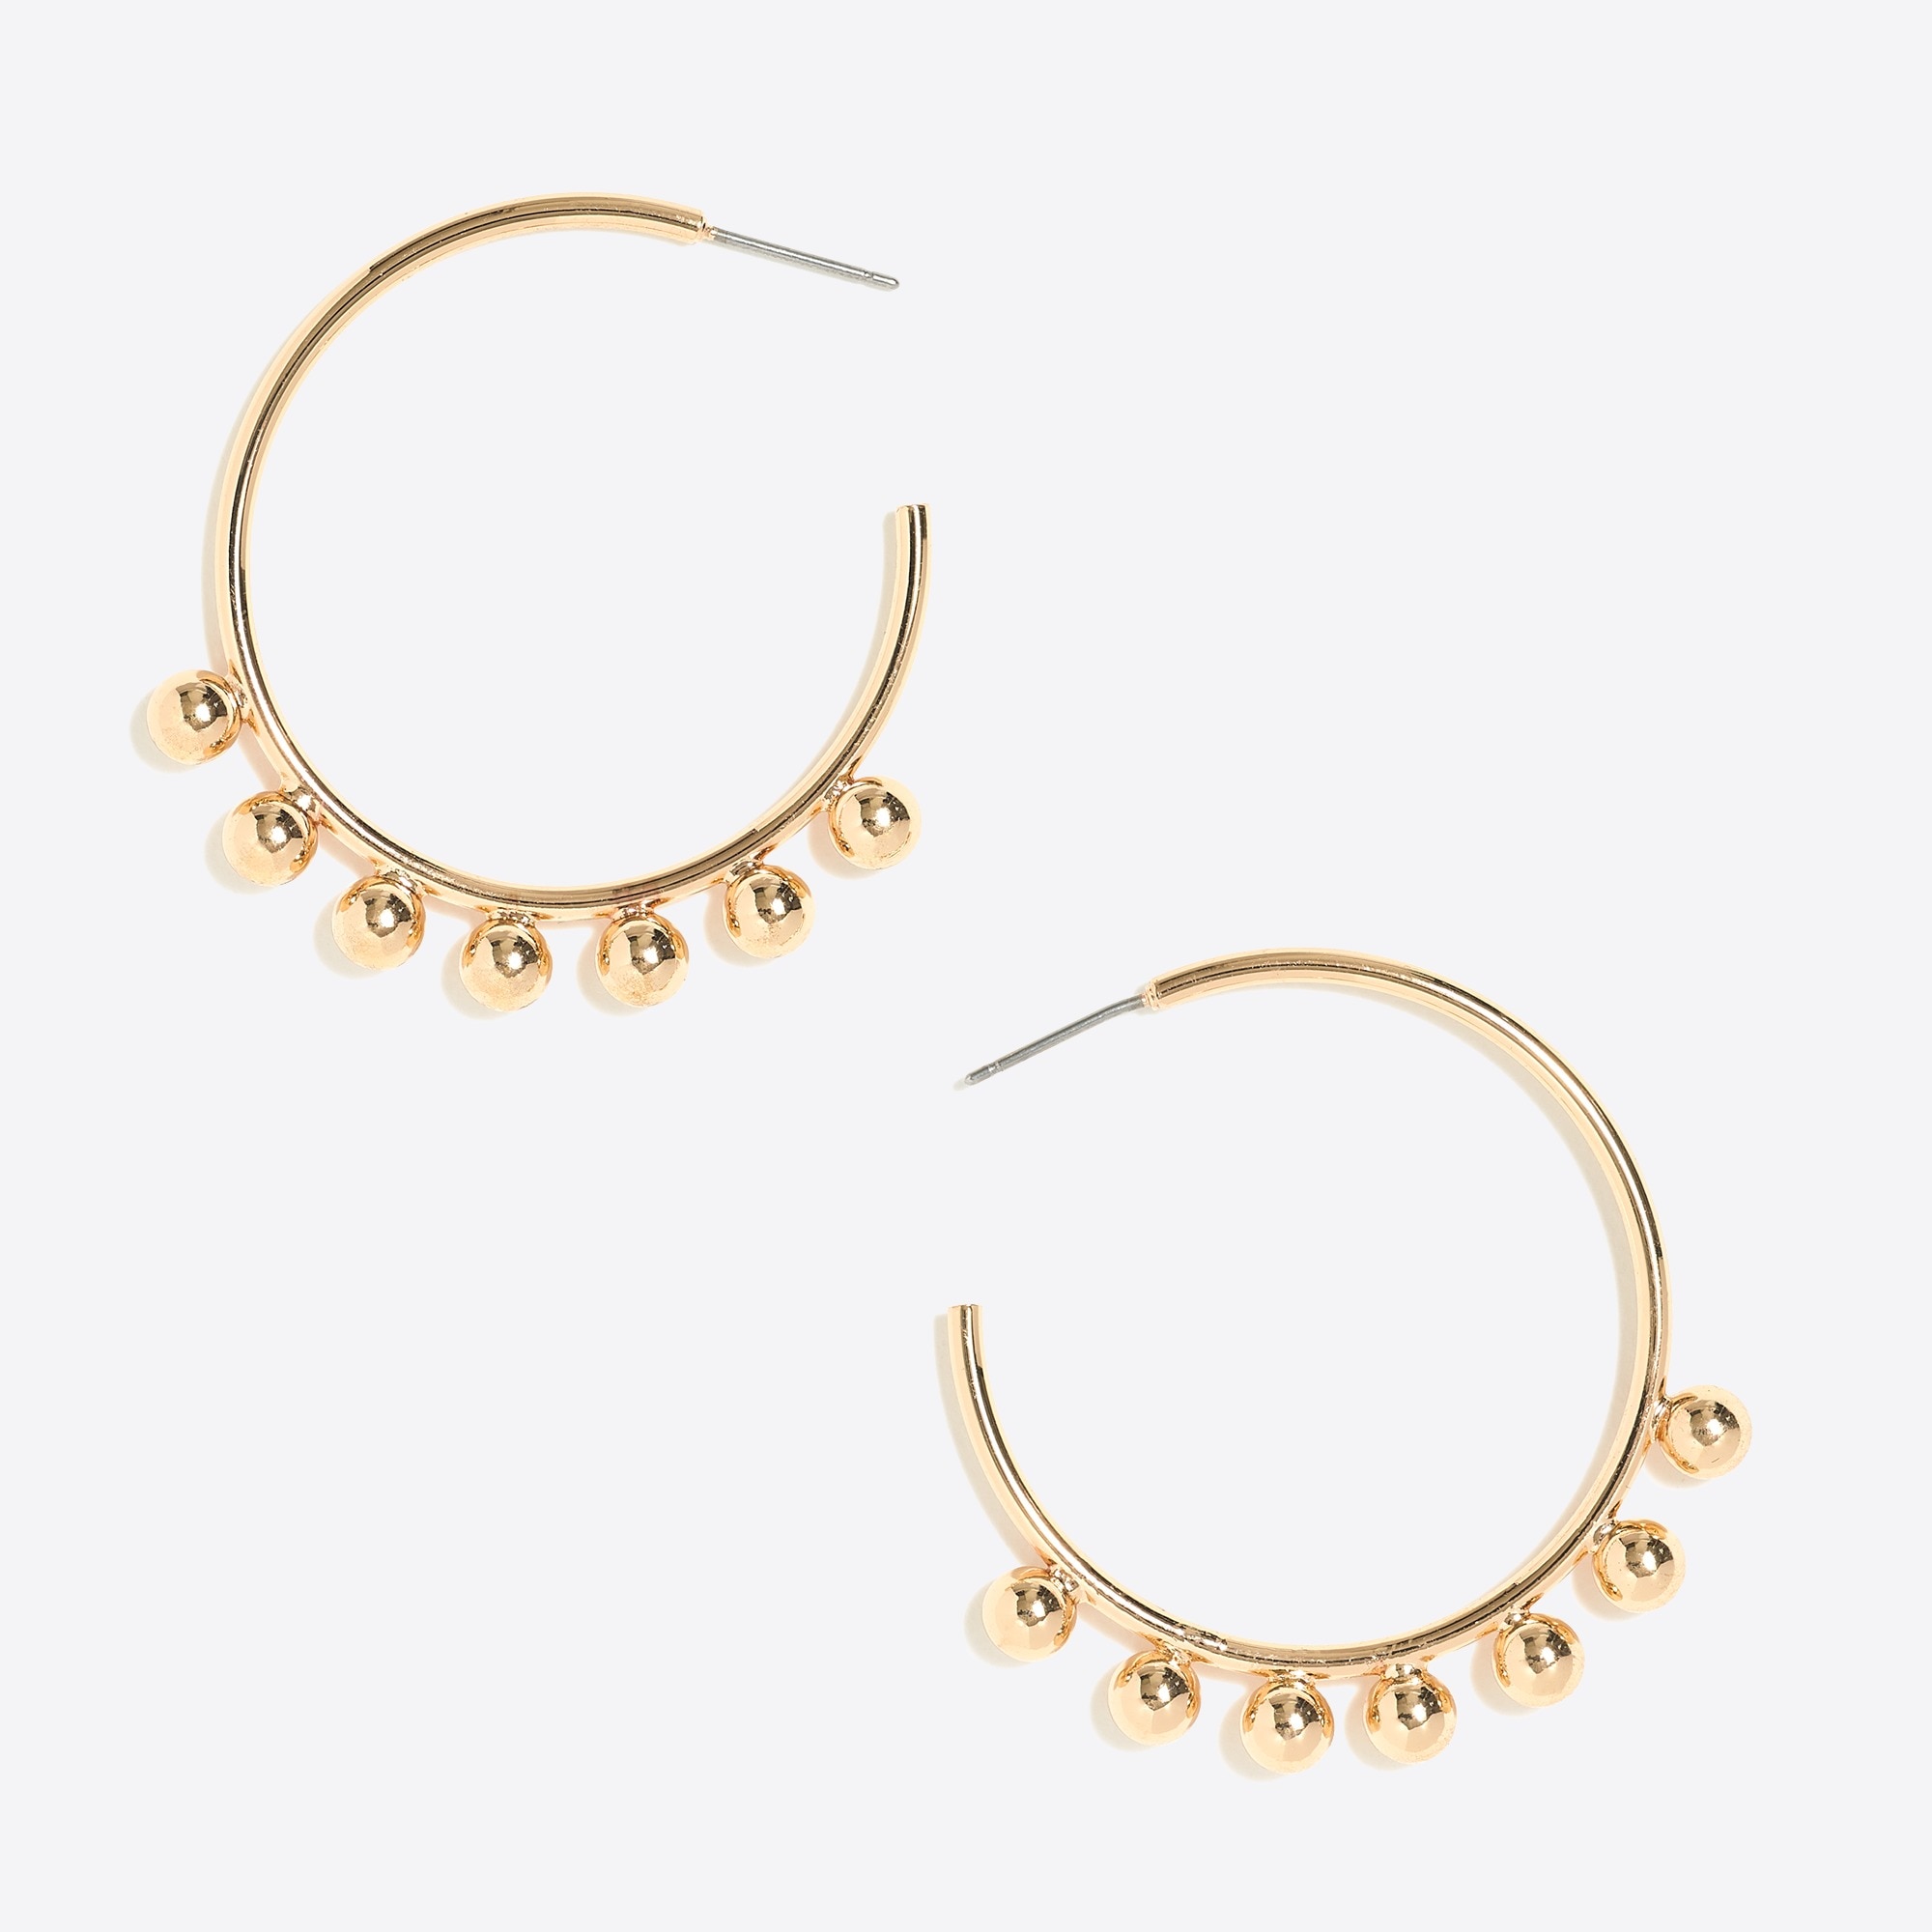 J.Crew Factory: Golden ball hoop earrings